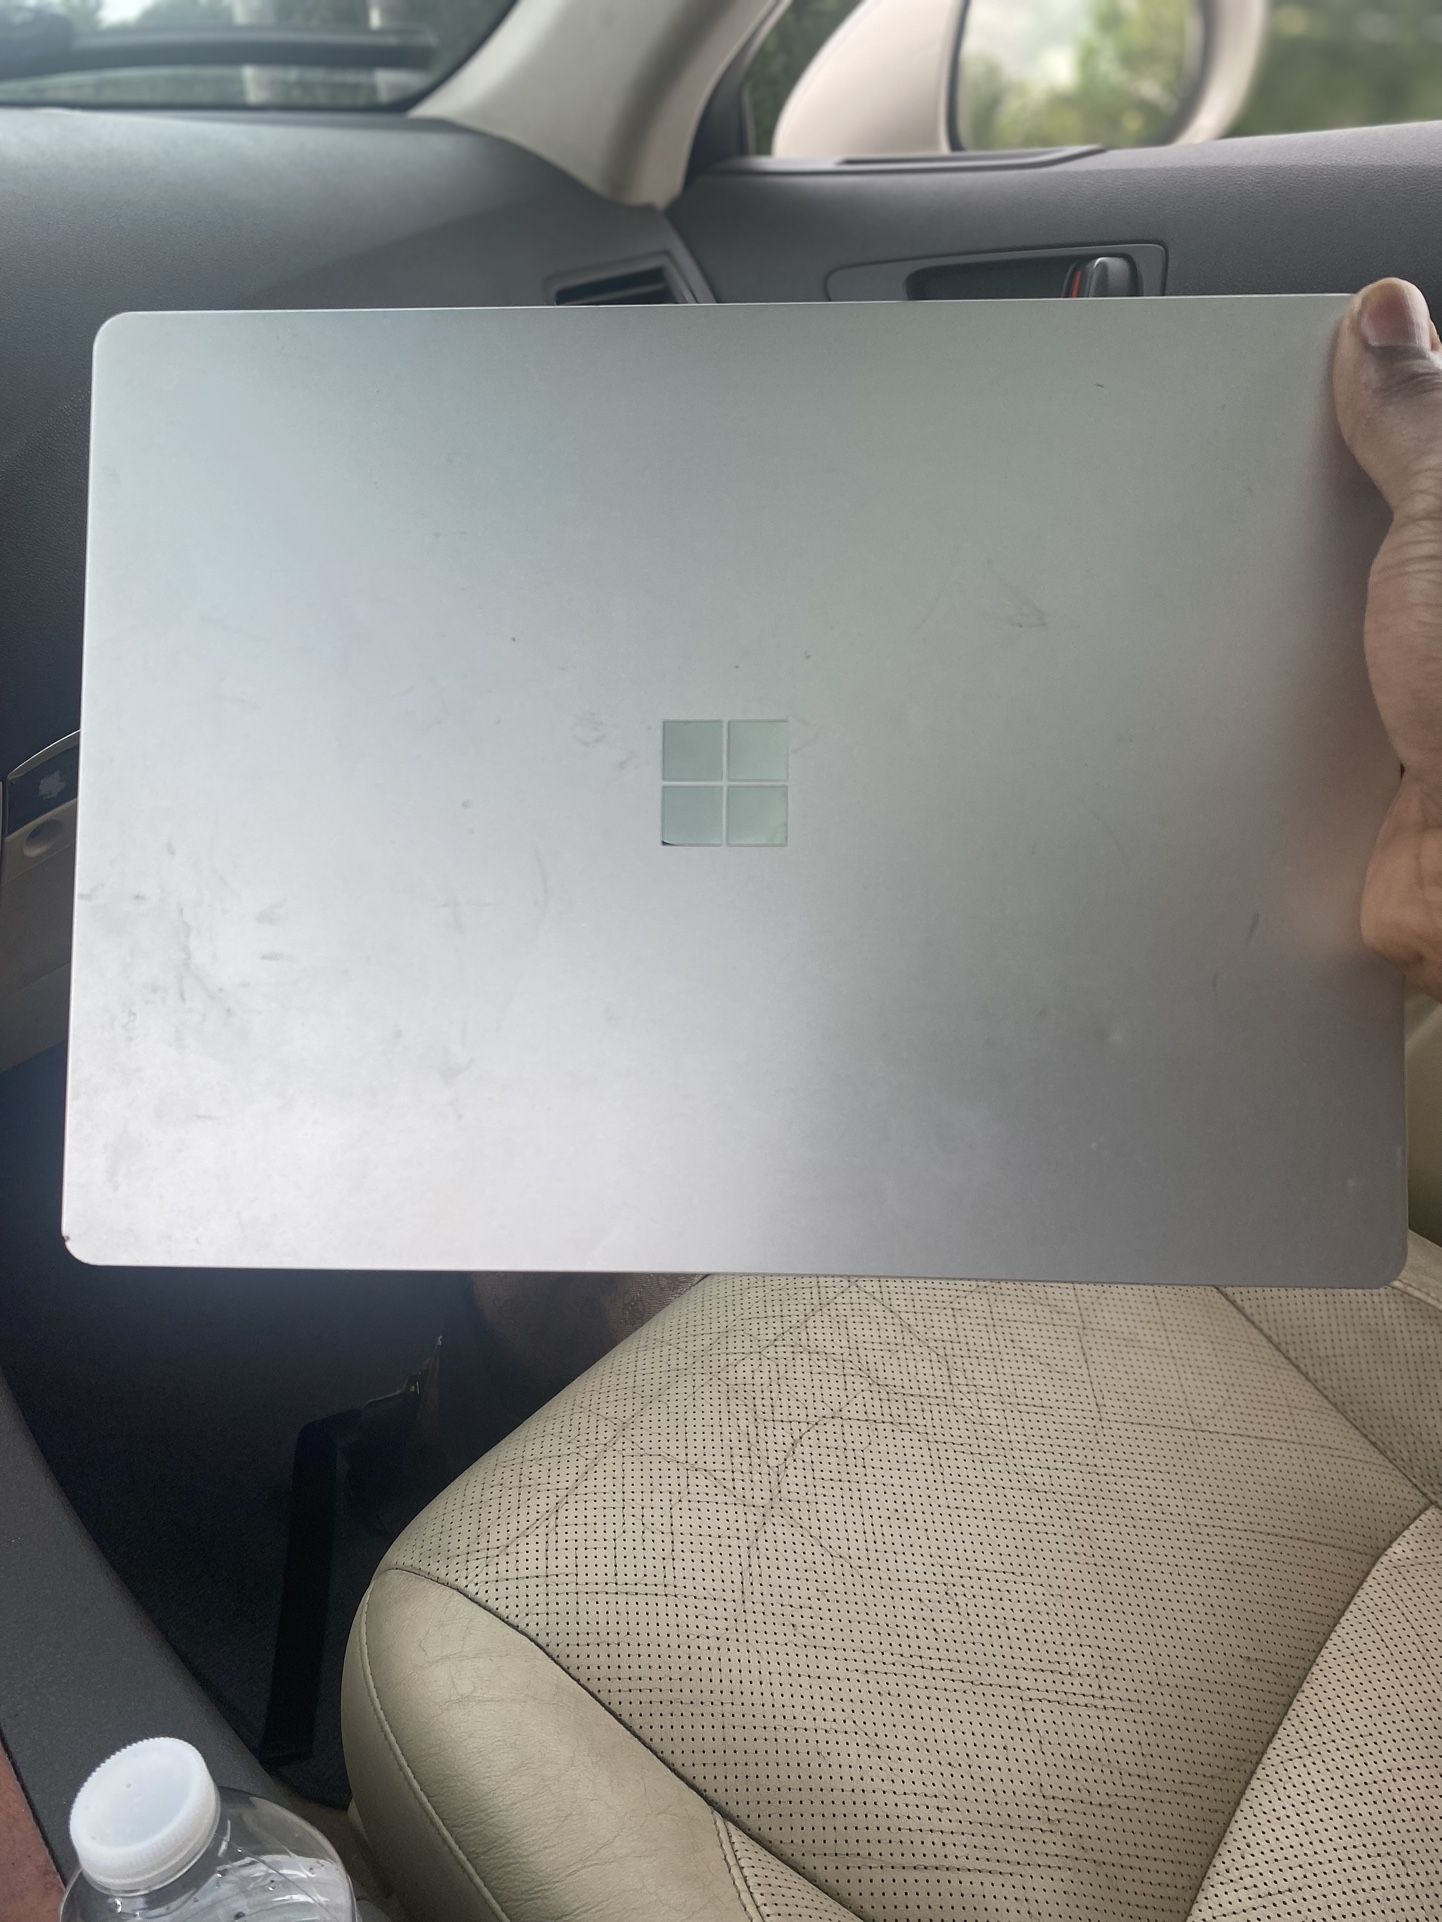 Windows Touchscreen Surface Laptop 